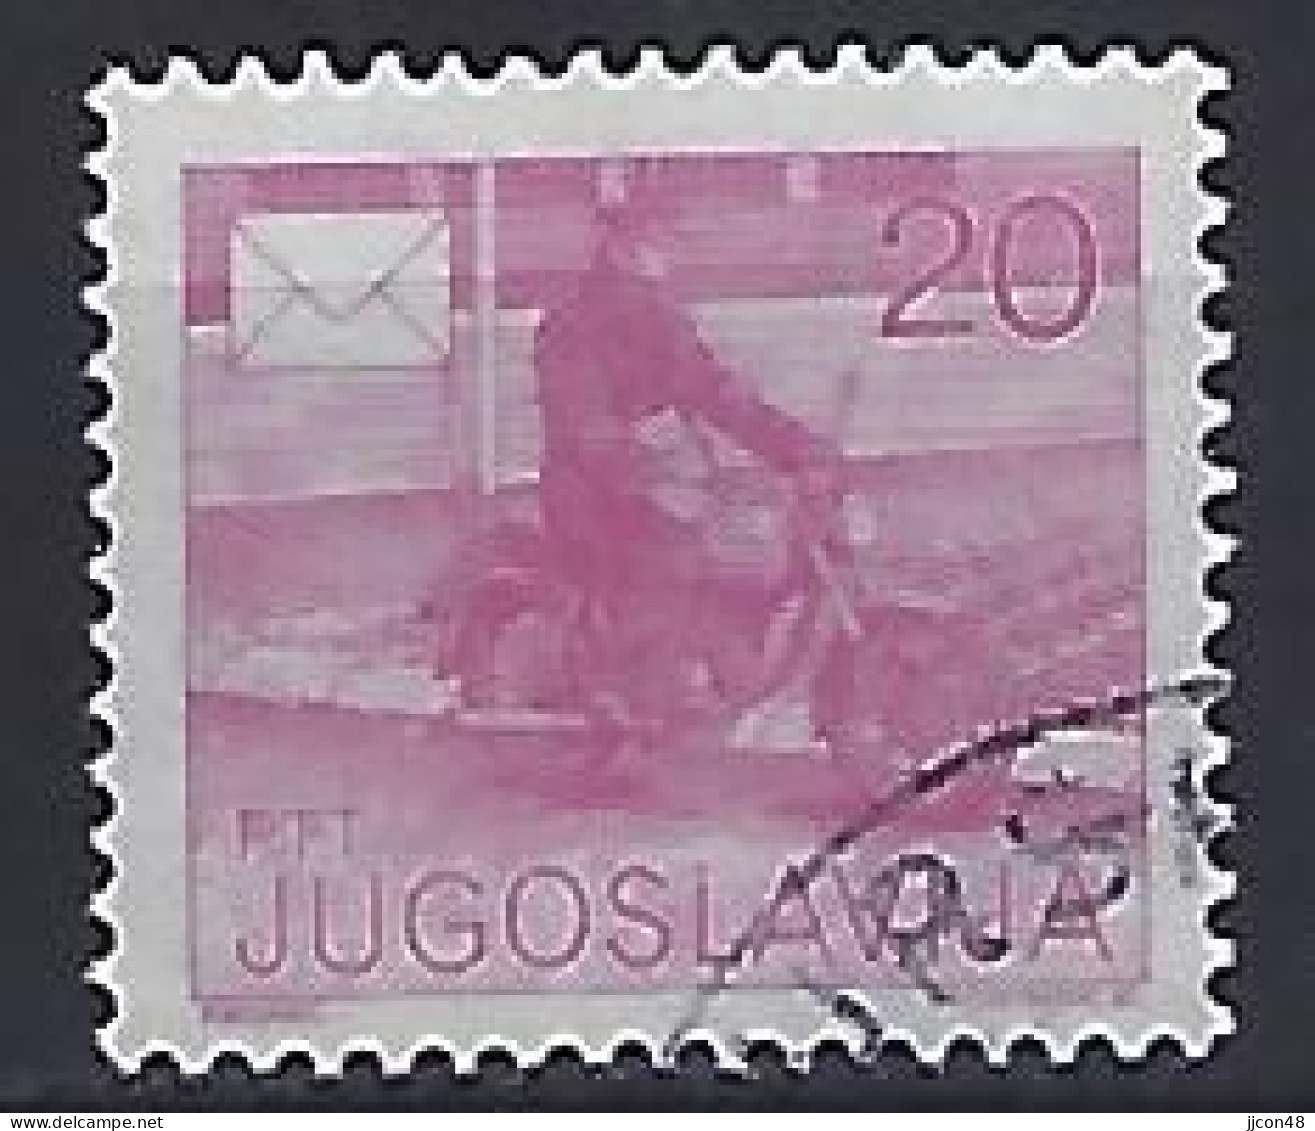 Jugoslavia 1986  Postdienst (o) Mi.2151 A - Usati